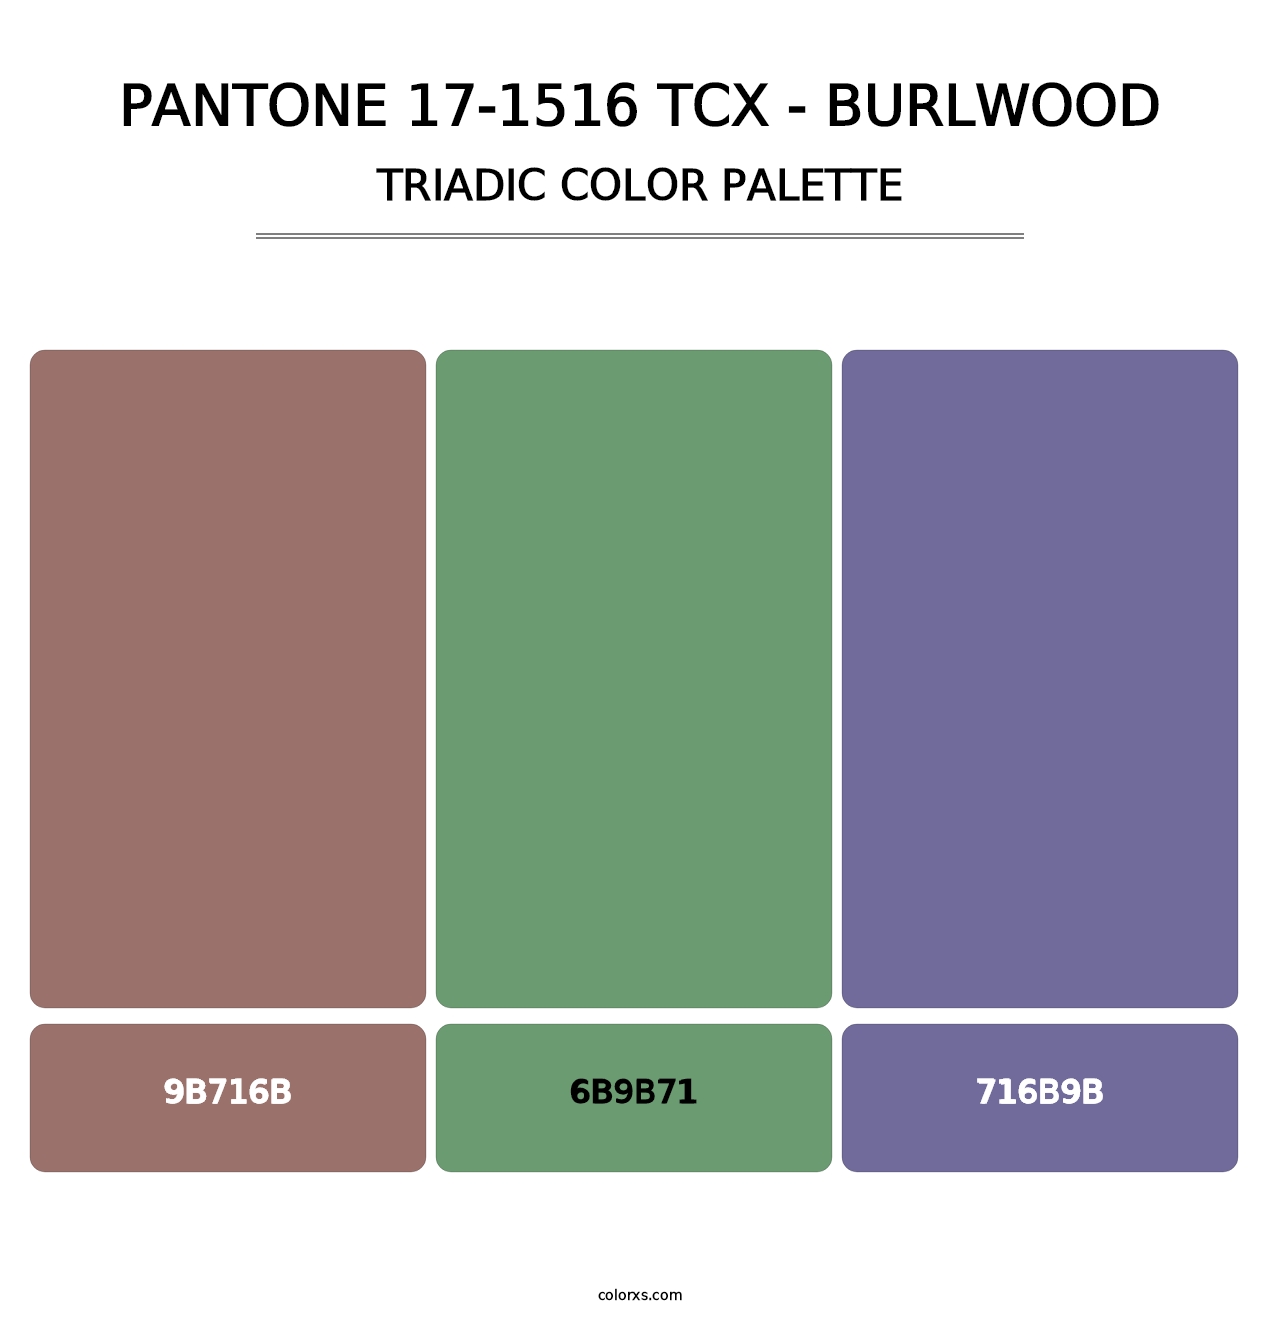 PANTONE 17-1516 TCX - Burlwood - Triadic Color Palette